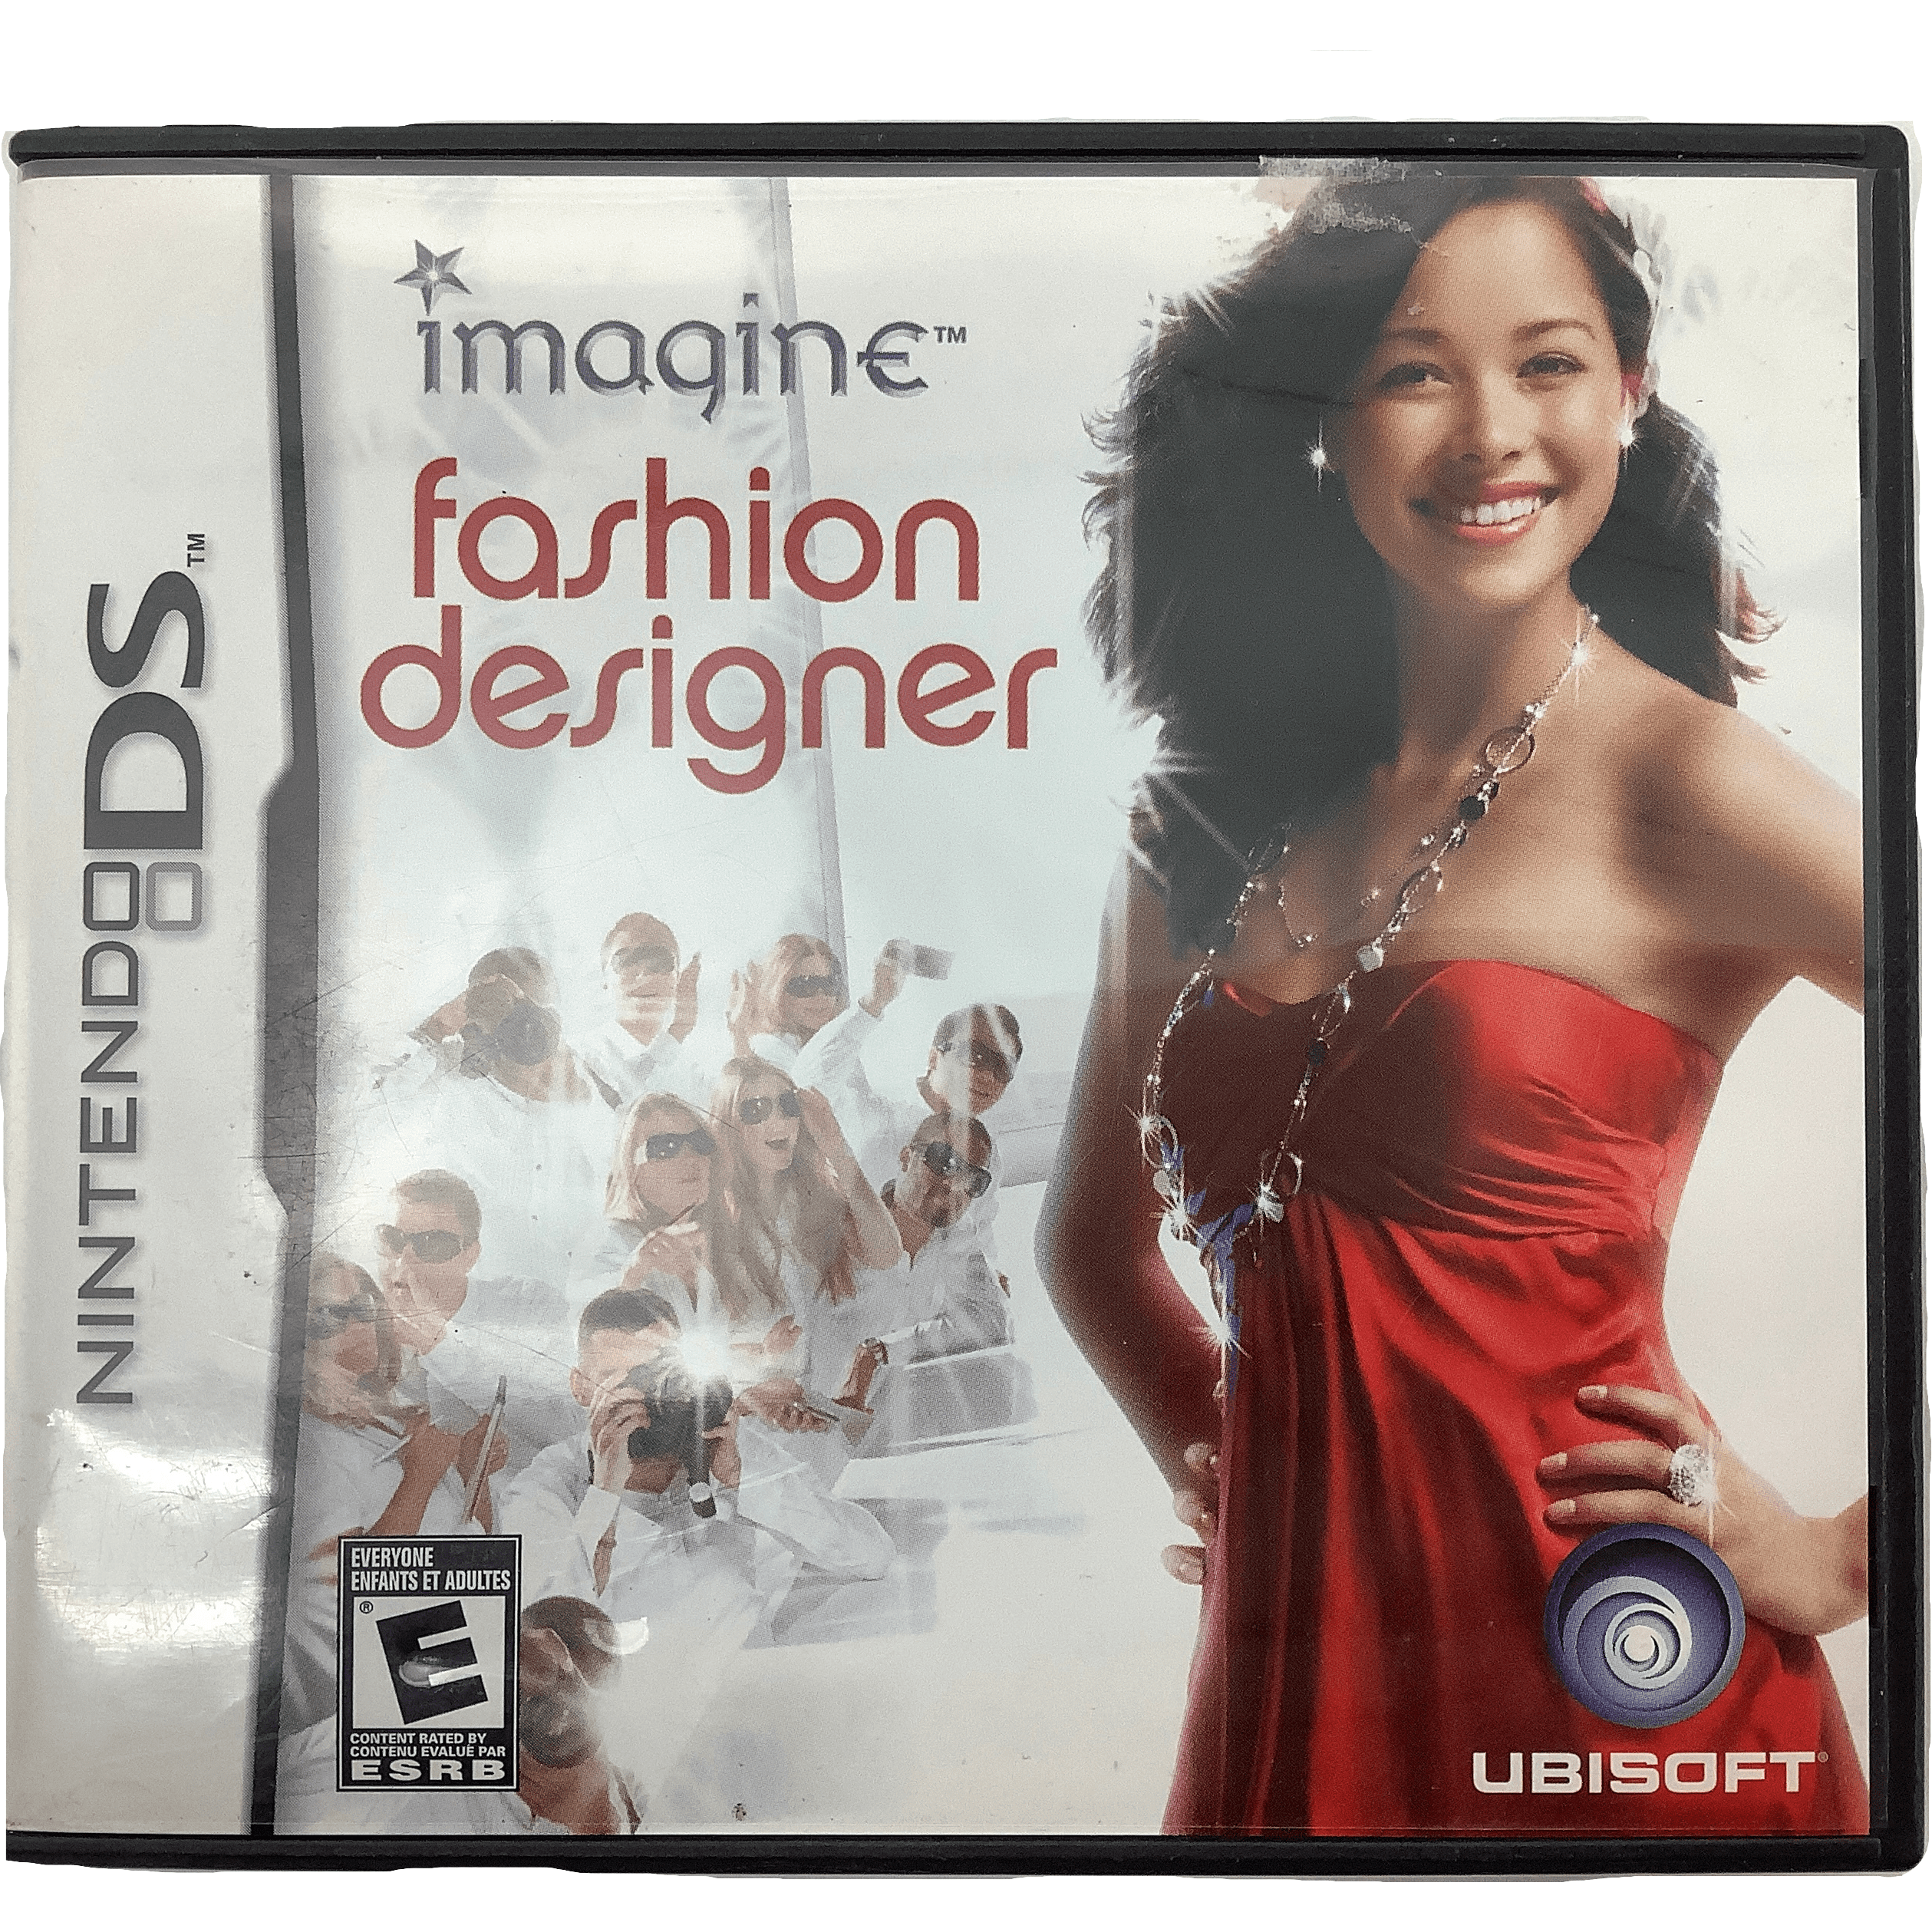 Nintendo DS / Ubisoft "Imagine Fashion Designer" Game / Video Game **OPENED**